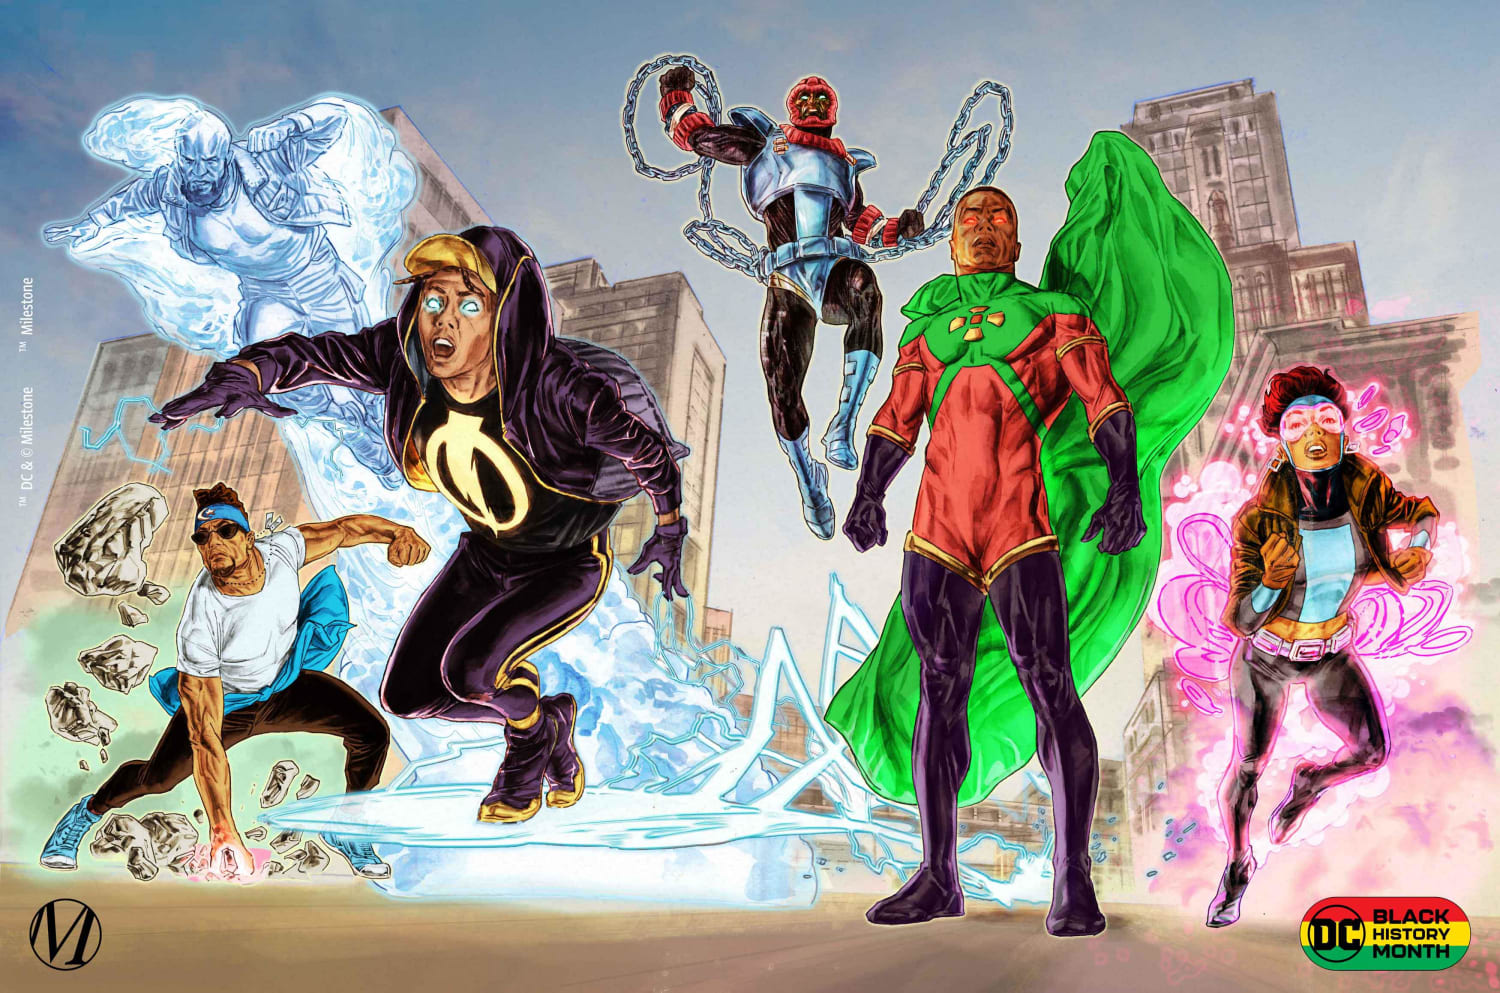 A Celebration of MILESTONE (DC Comics) Super Heroes for Black History Month, by Doug Braithwaite